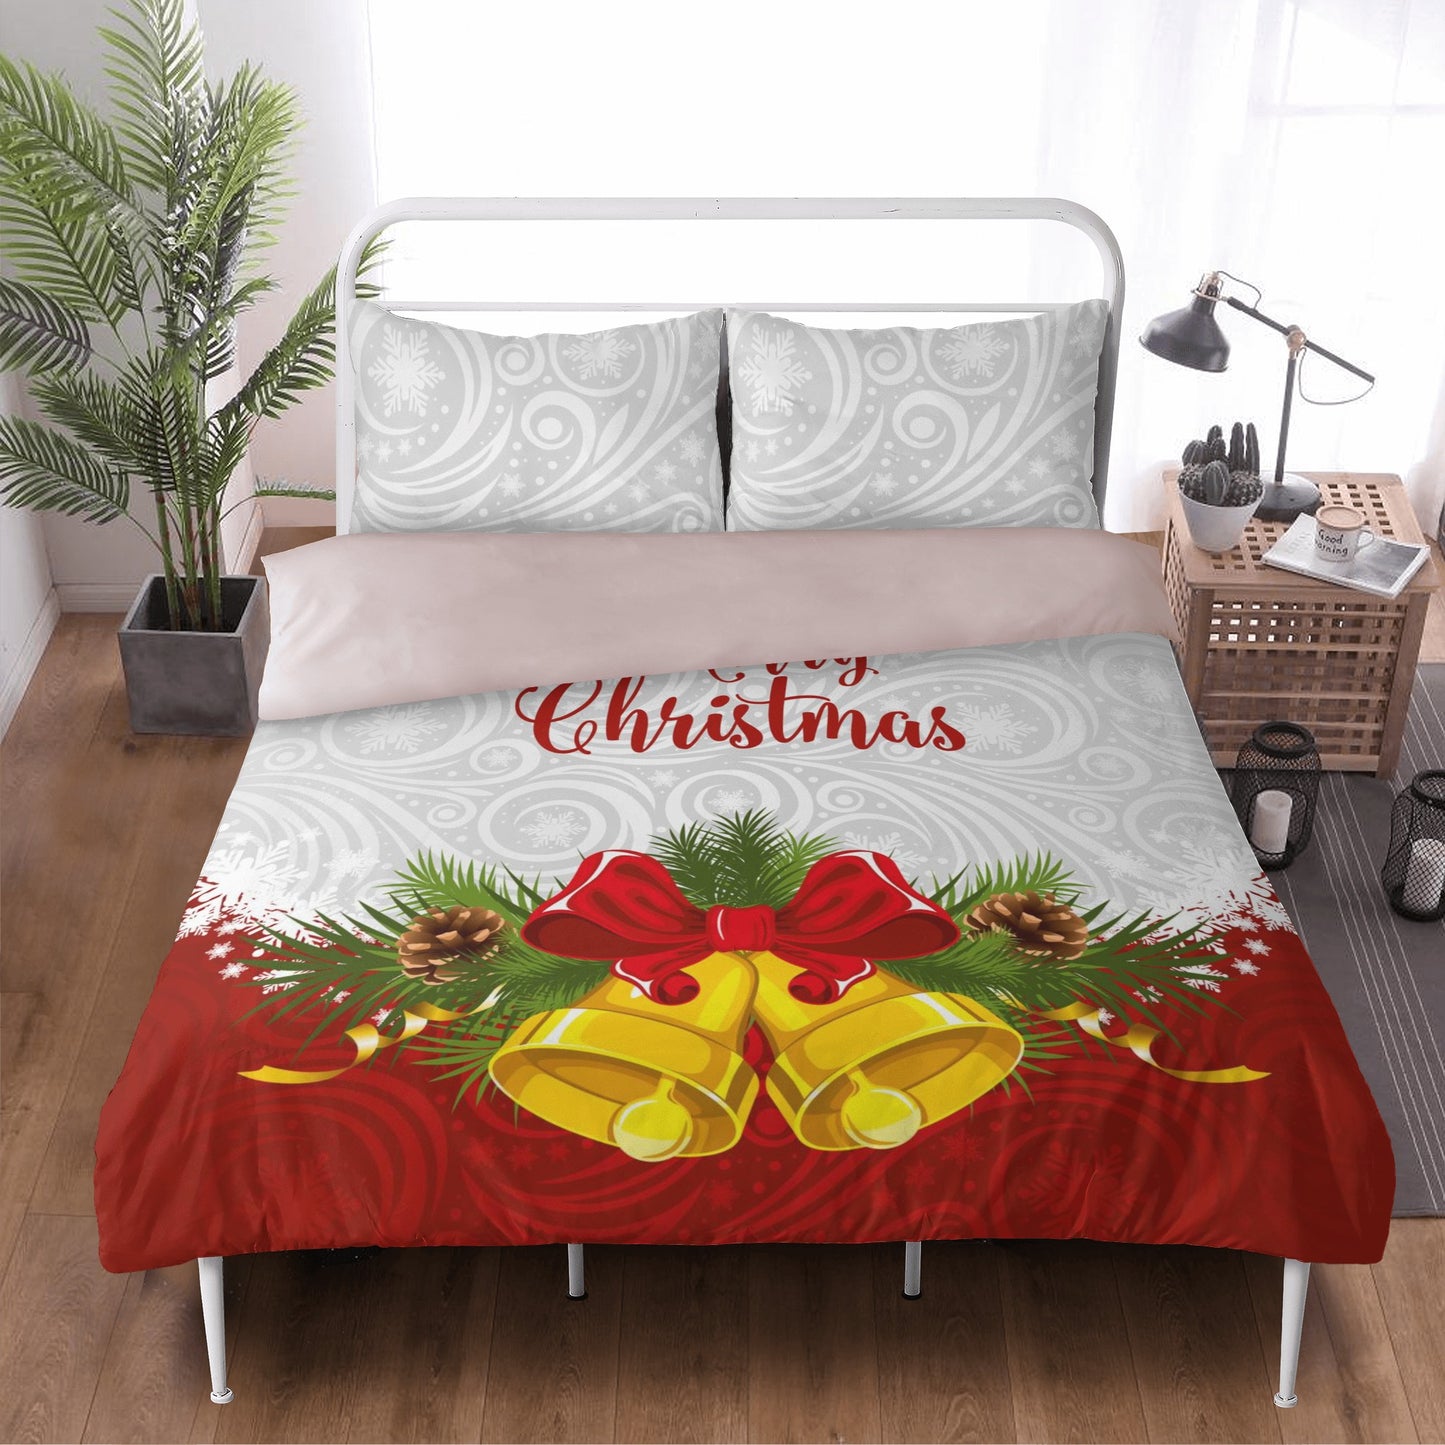 Merry Christmas Sheets to Help You Fall Asleep 3 Pcs Beddings